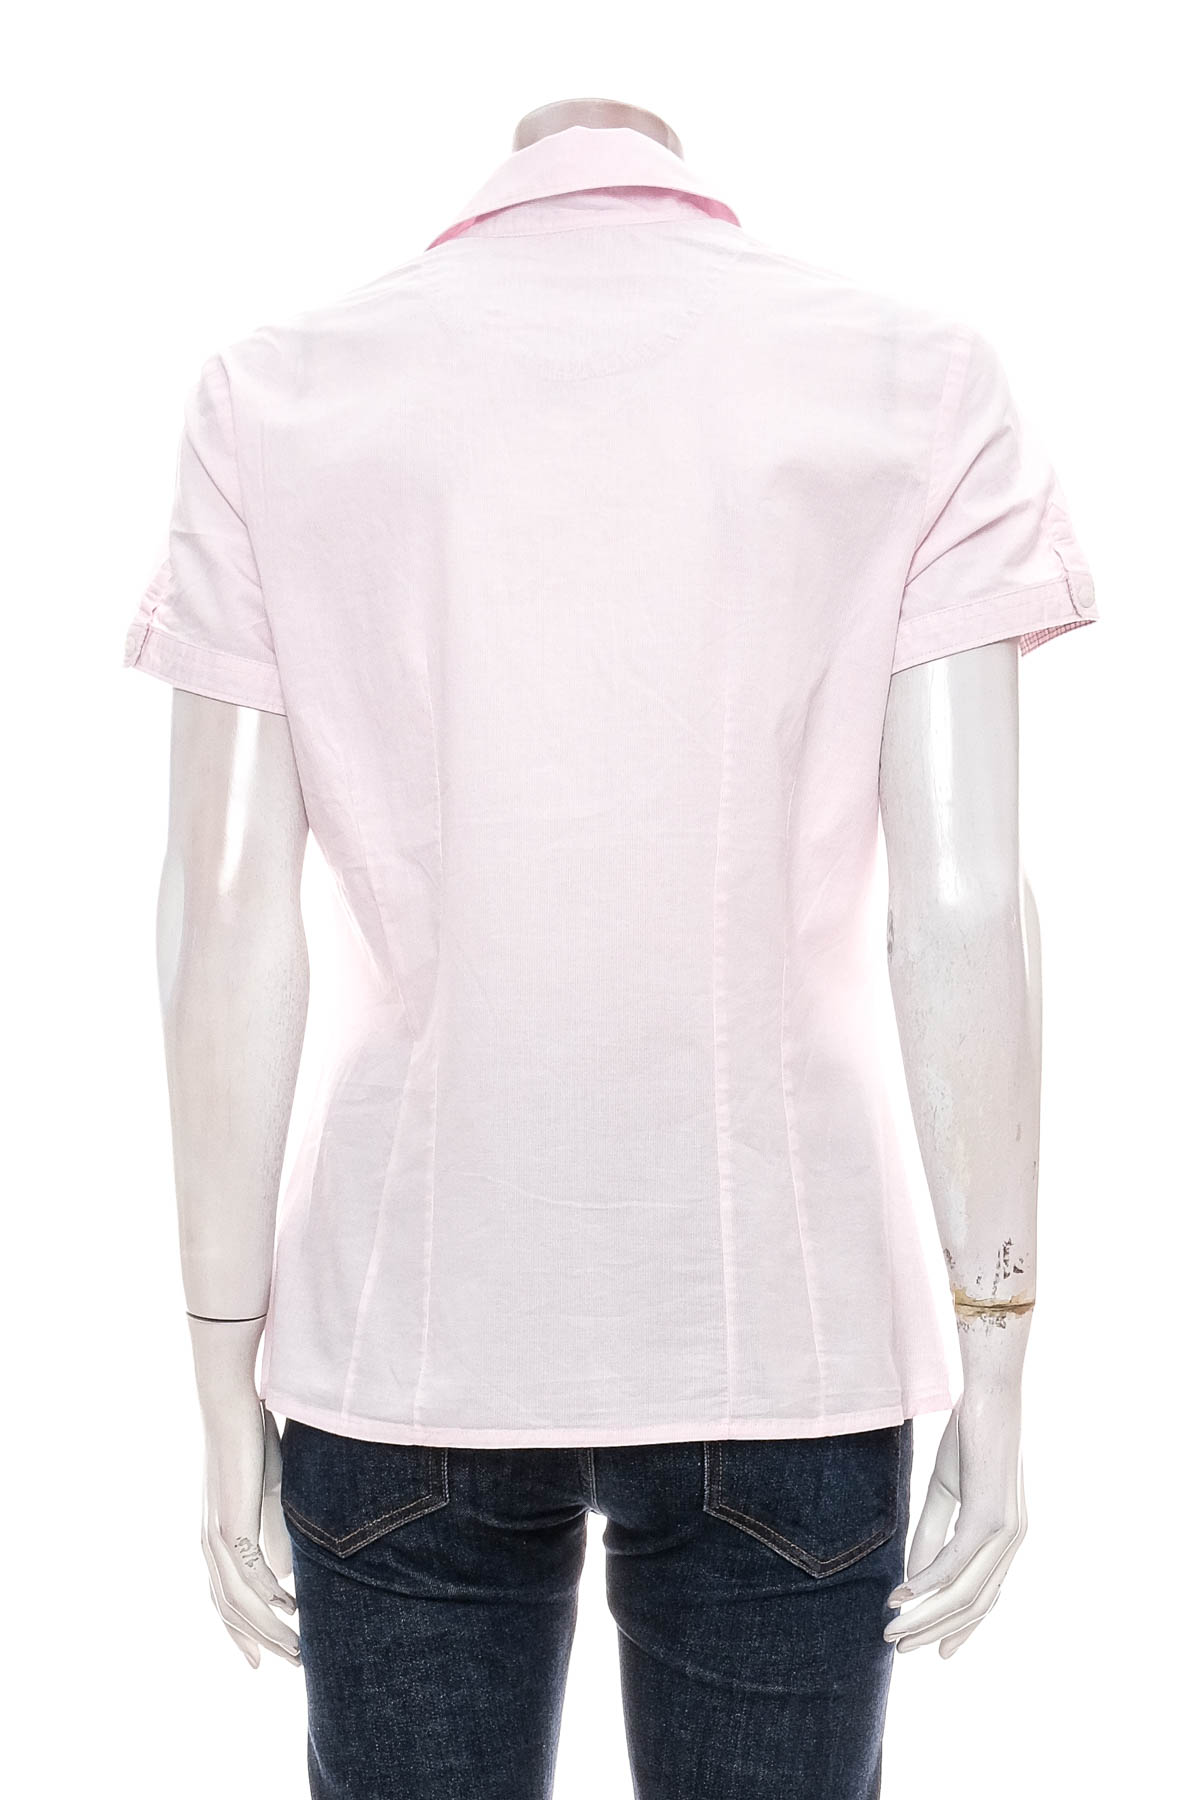 Women's shirt - S.Oliver - 1